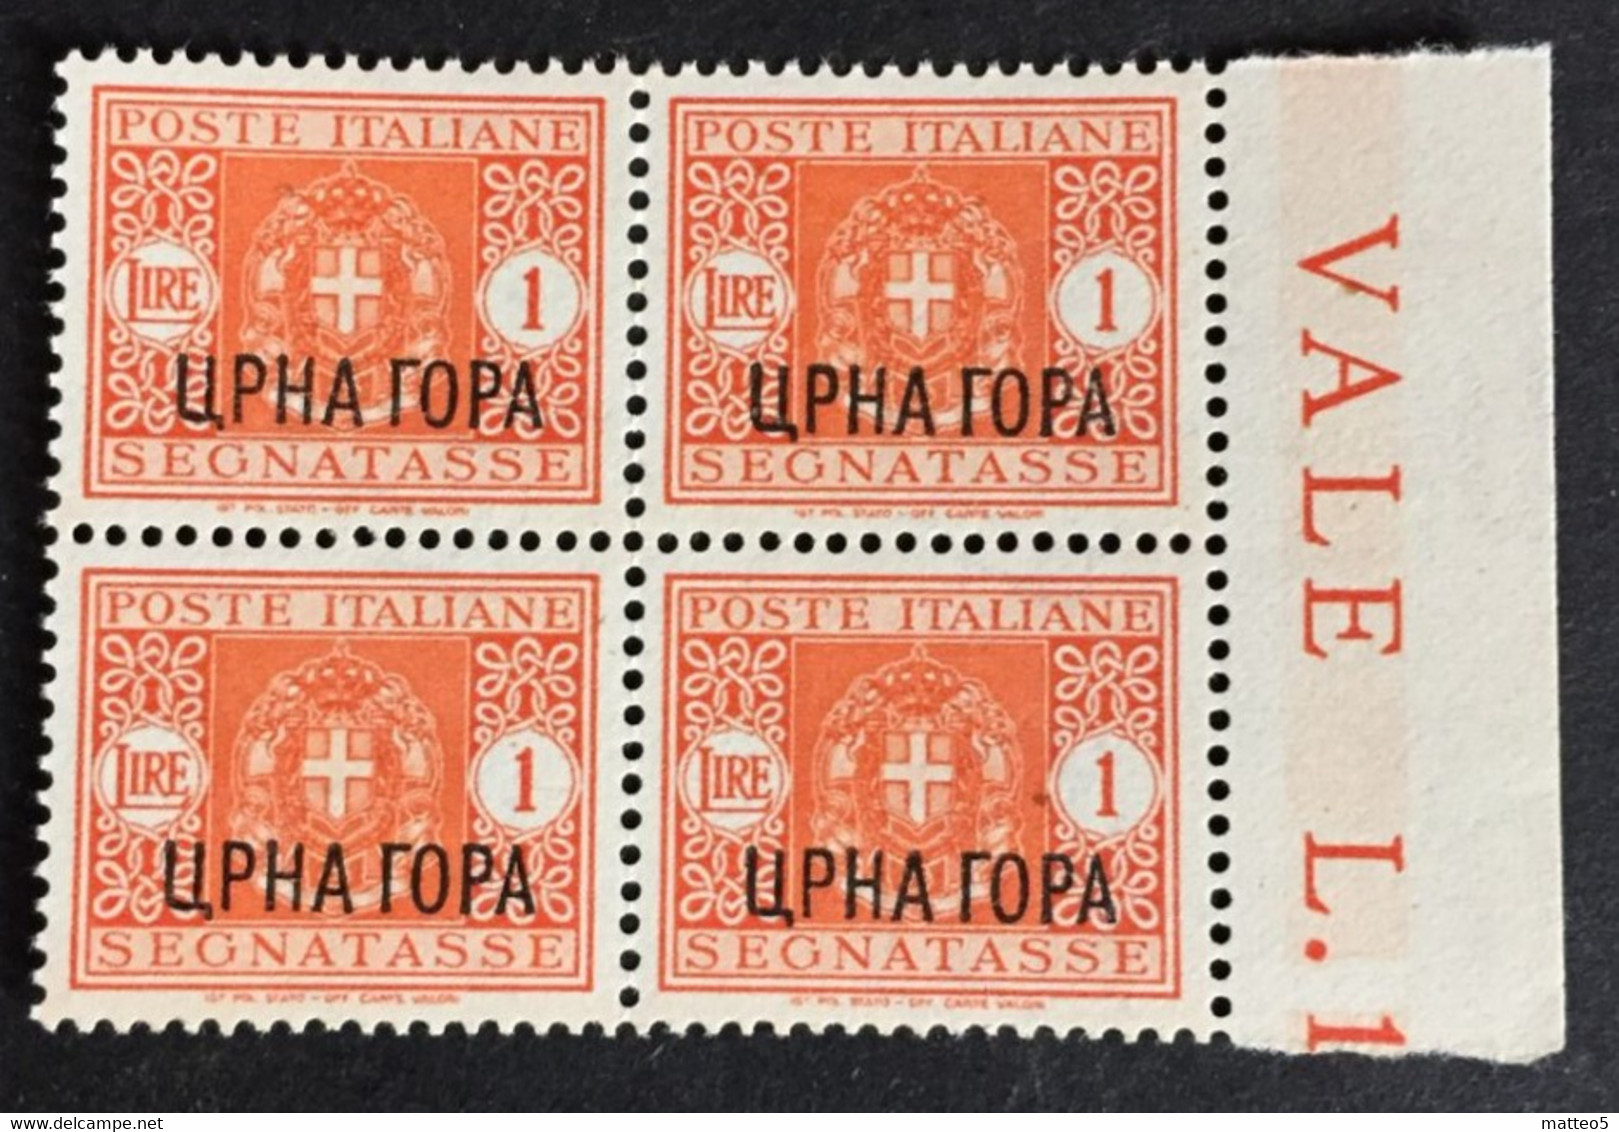 1941 - Italia - Occupazione Montenegro - Segnatasse - Lire 1  - Soprastampa UPHA TOPA - Nuovo - Quartina - Montenegro